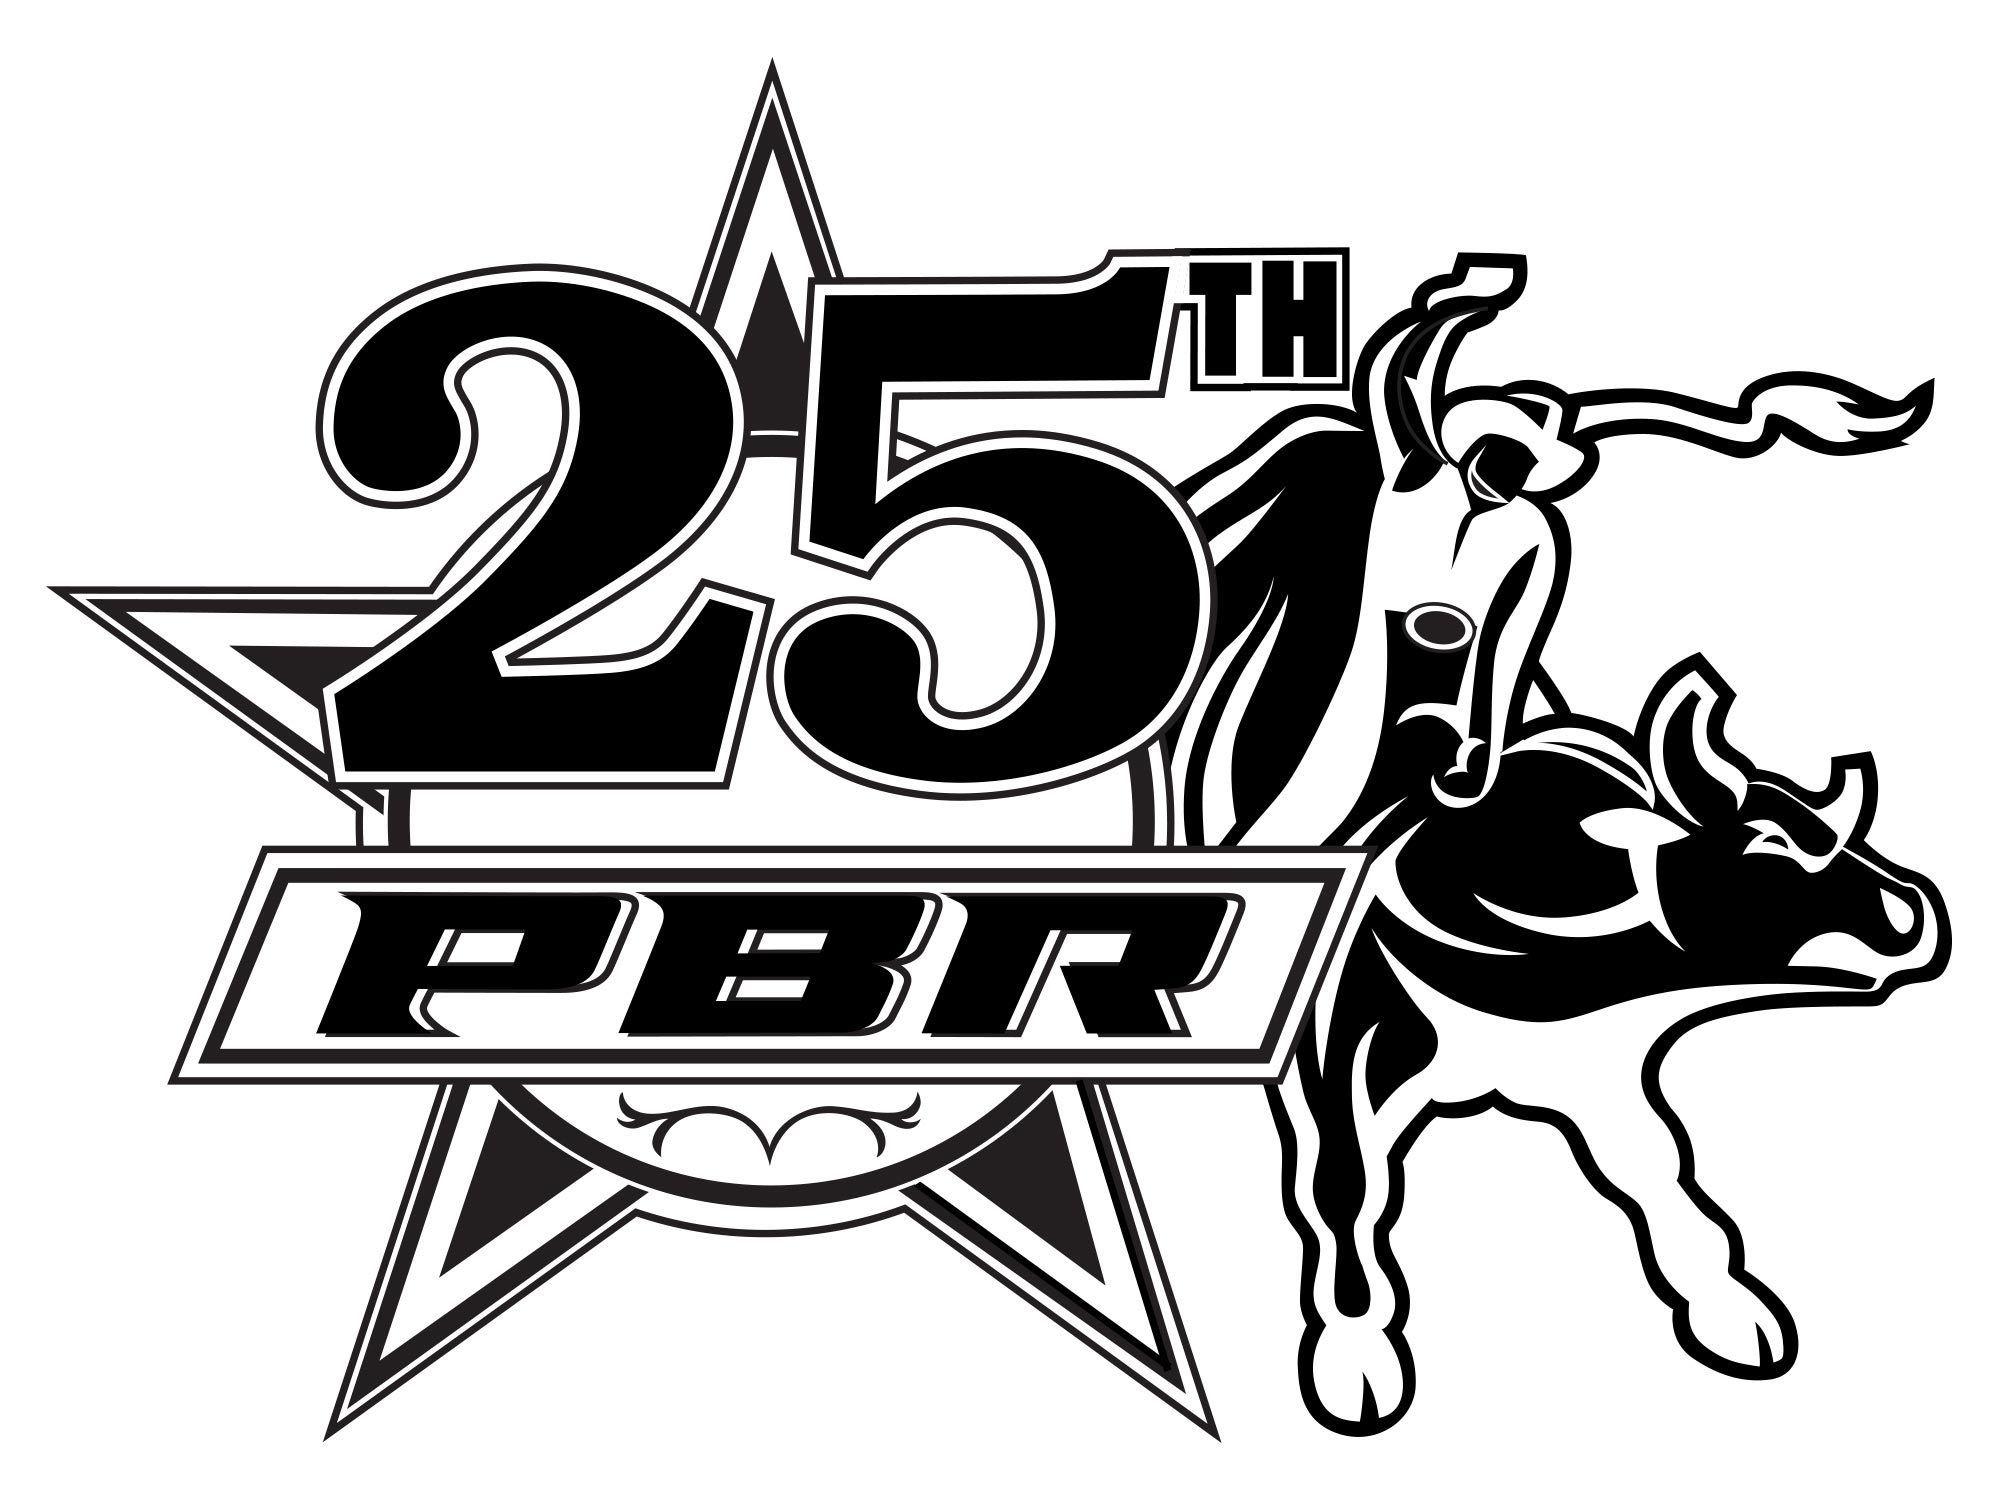 PBR Logo LogoDix